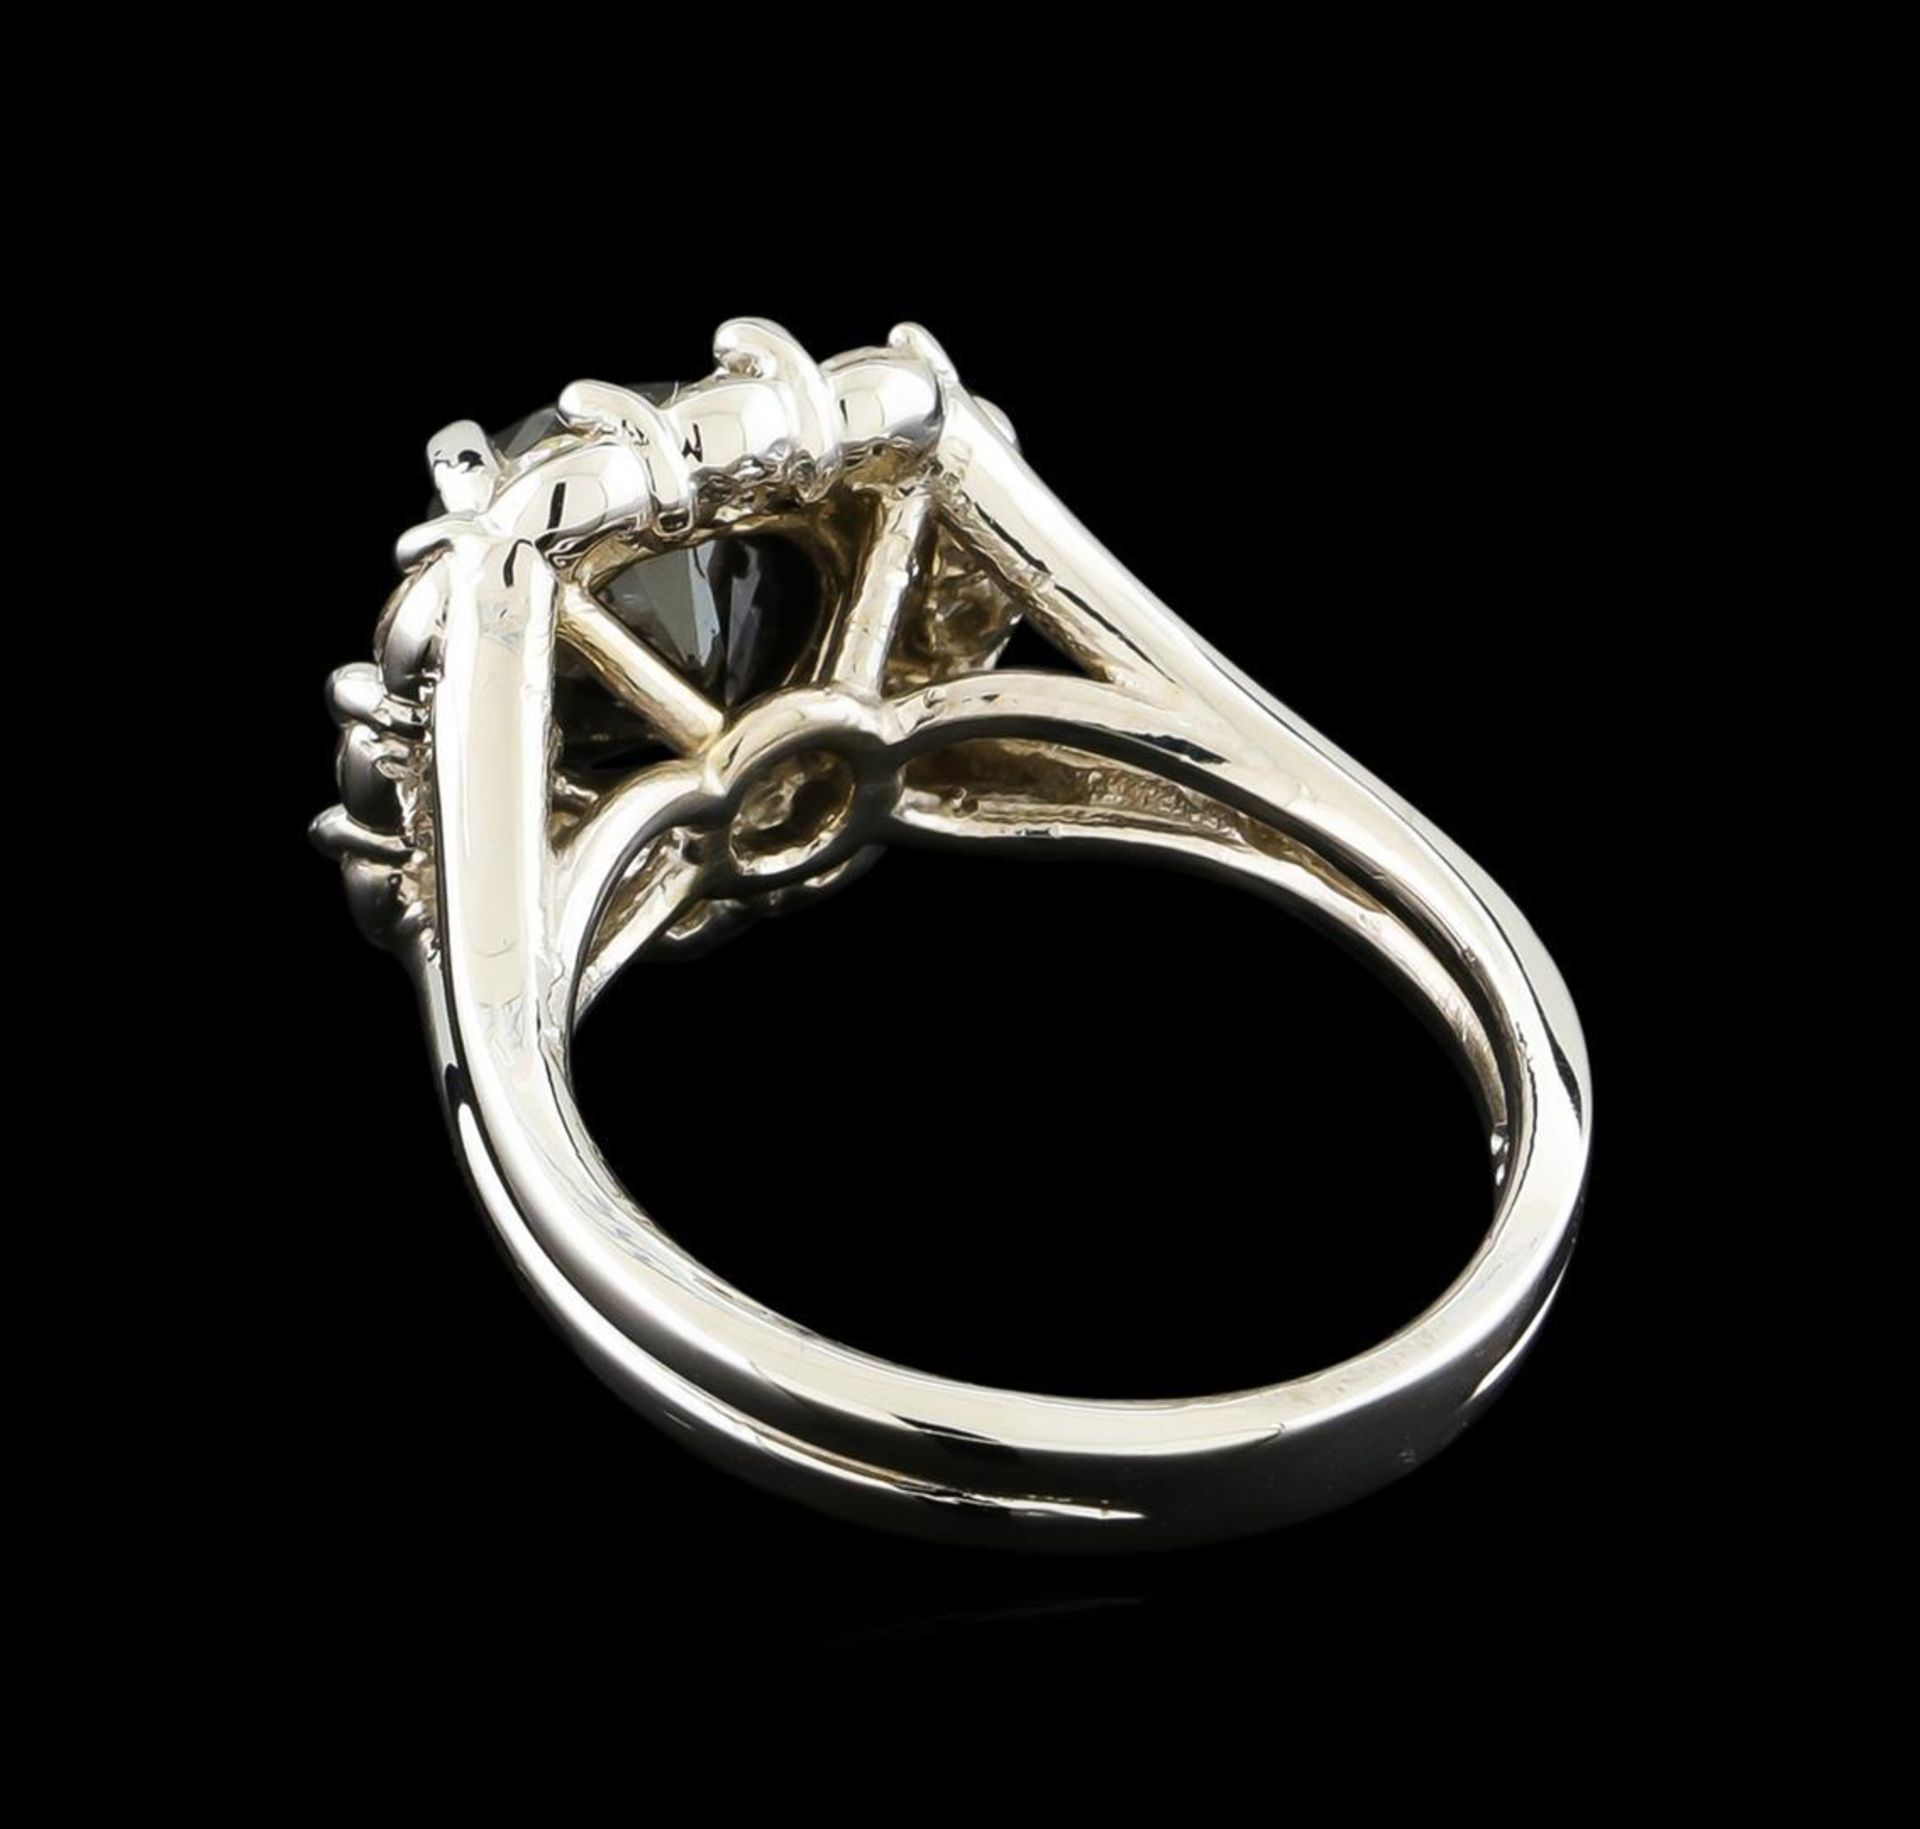 4.42 ctw Black Diamond Ring - 14KT White Gold - Image 3 of 5